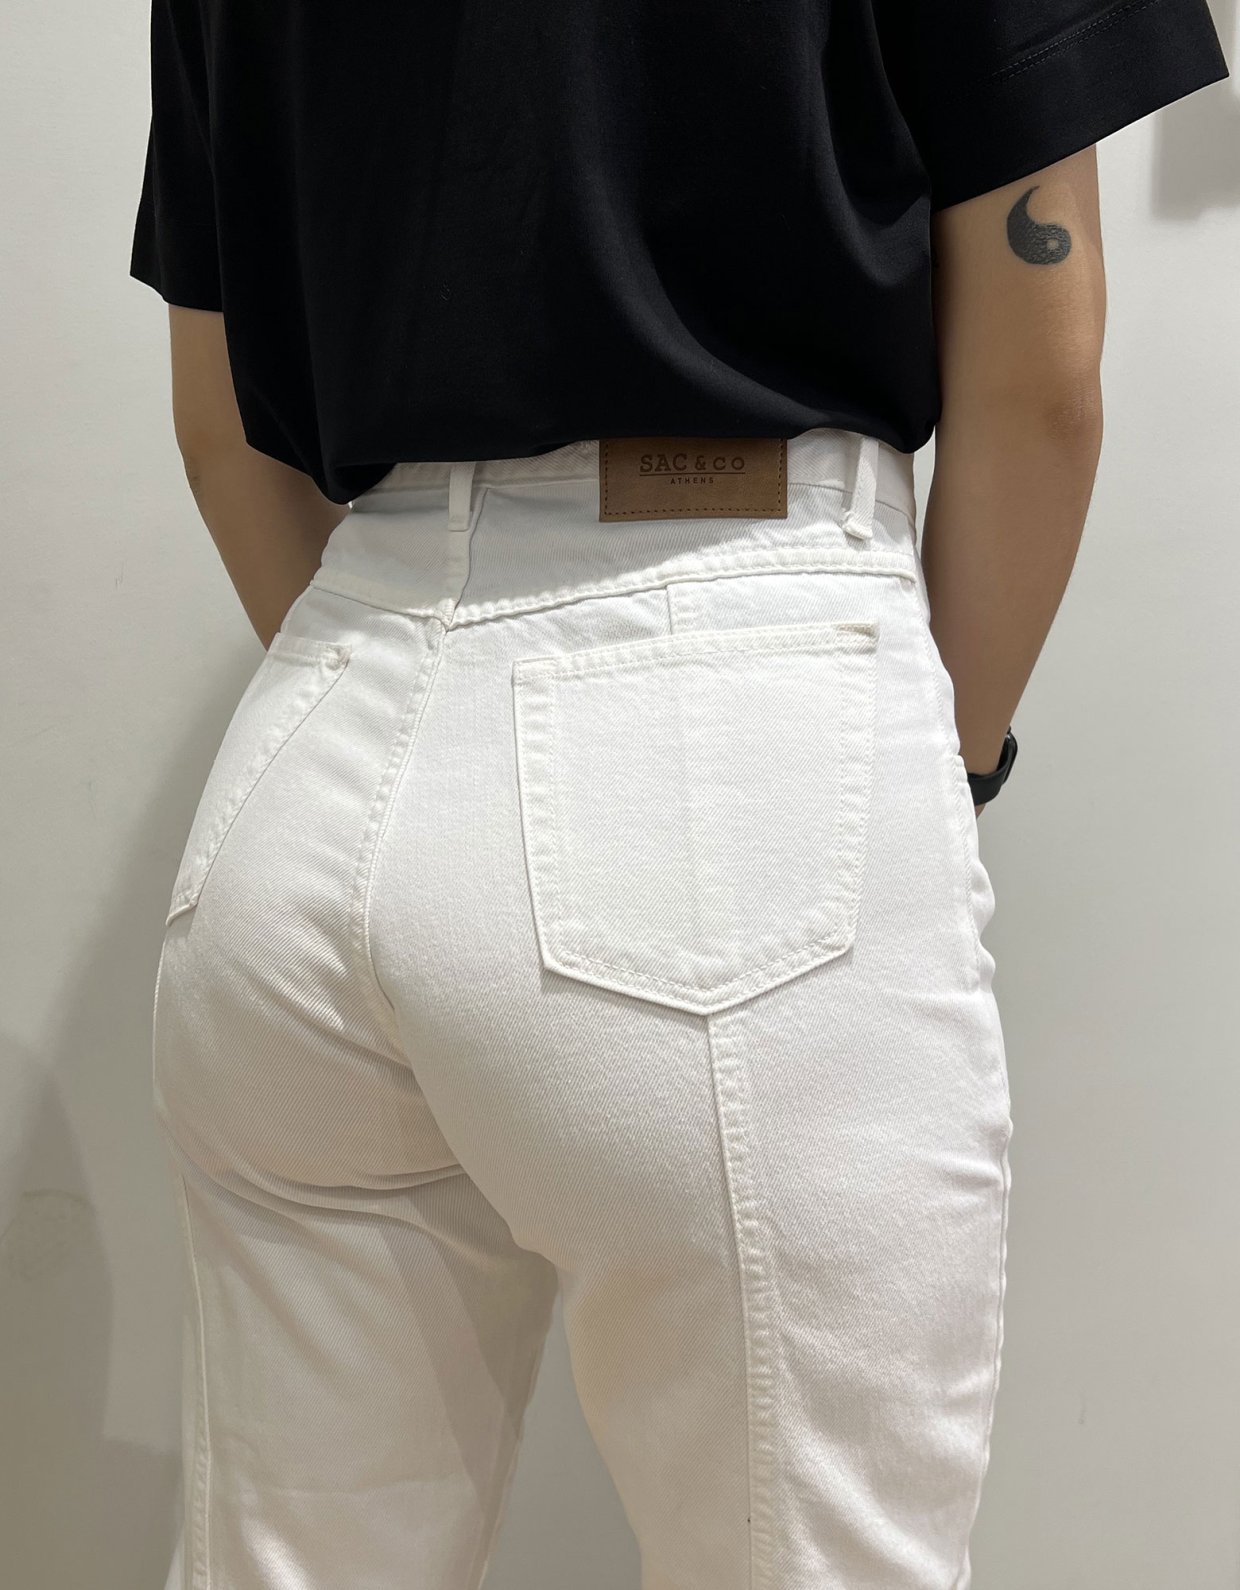 Sac & CO Jeans Diana white denim